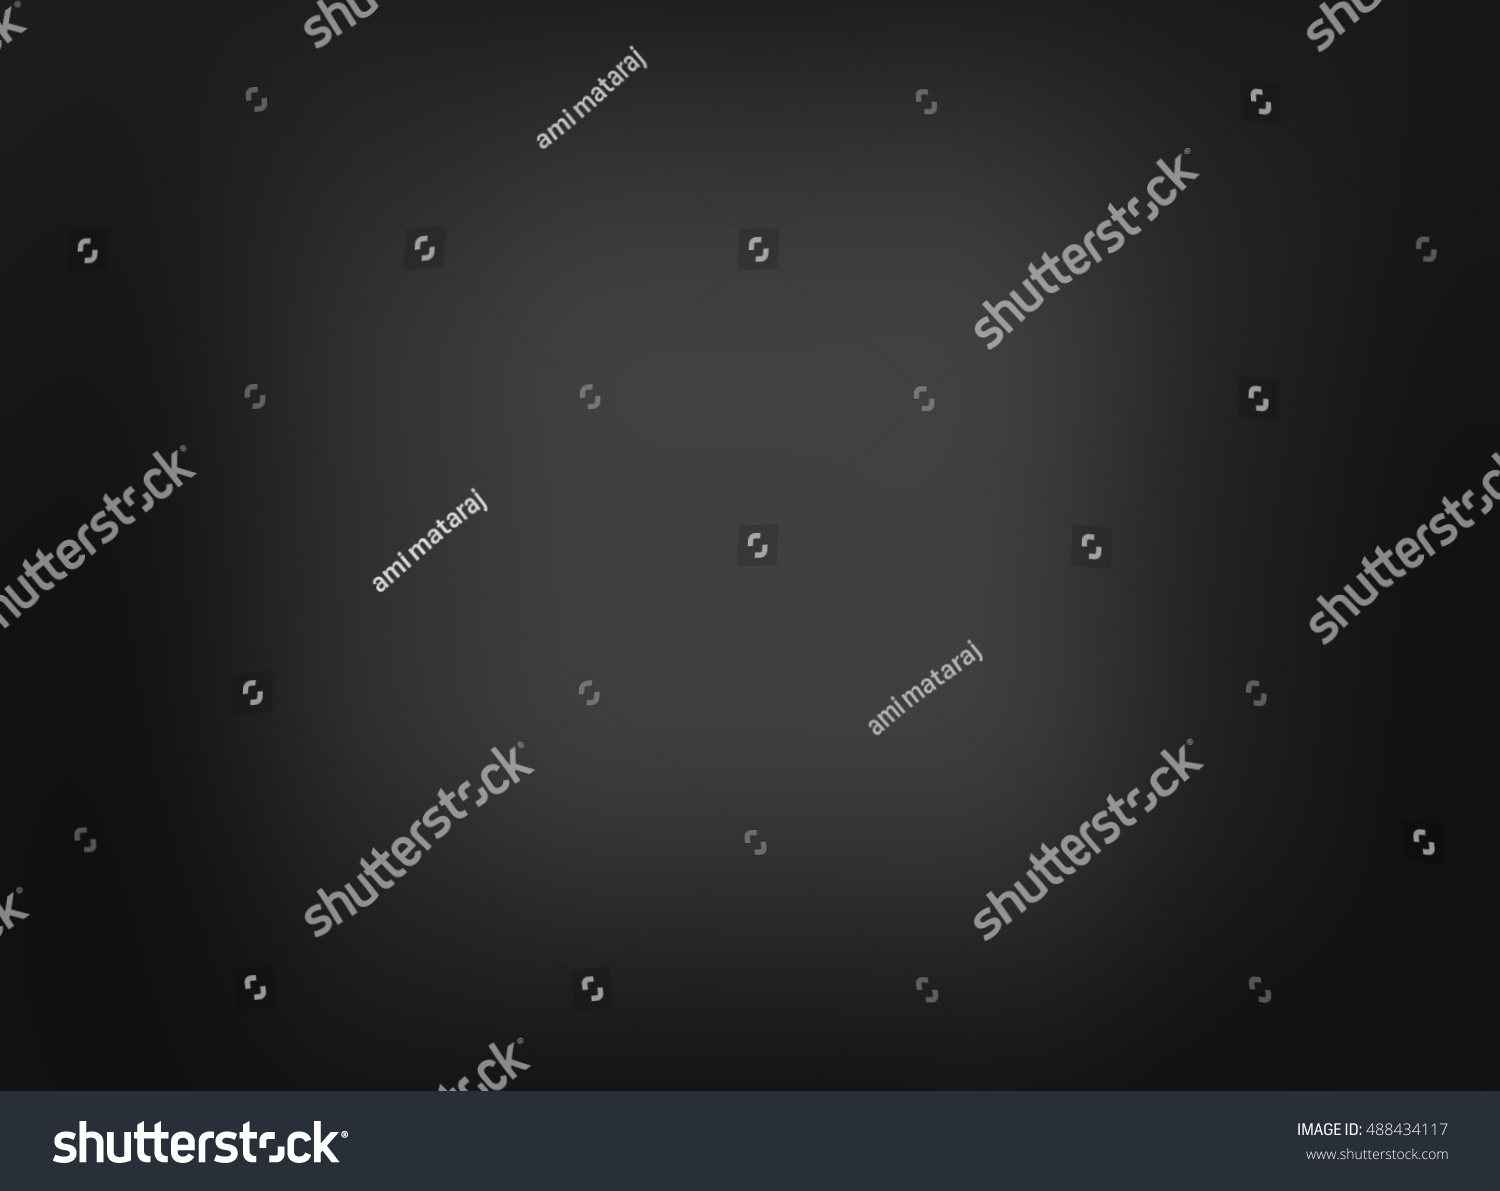 Black Background.Image Stock Photo 488434117 : Shutterstock